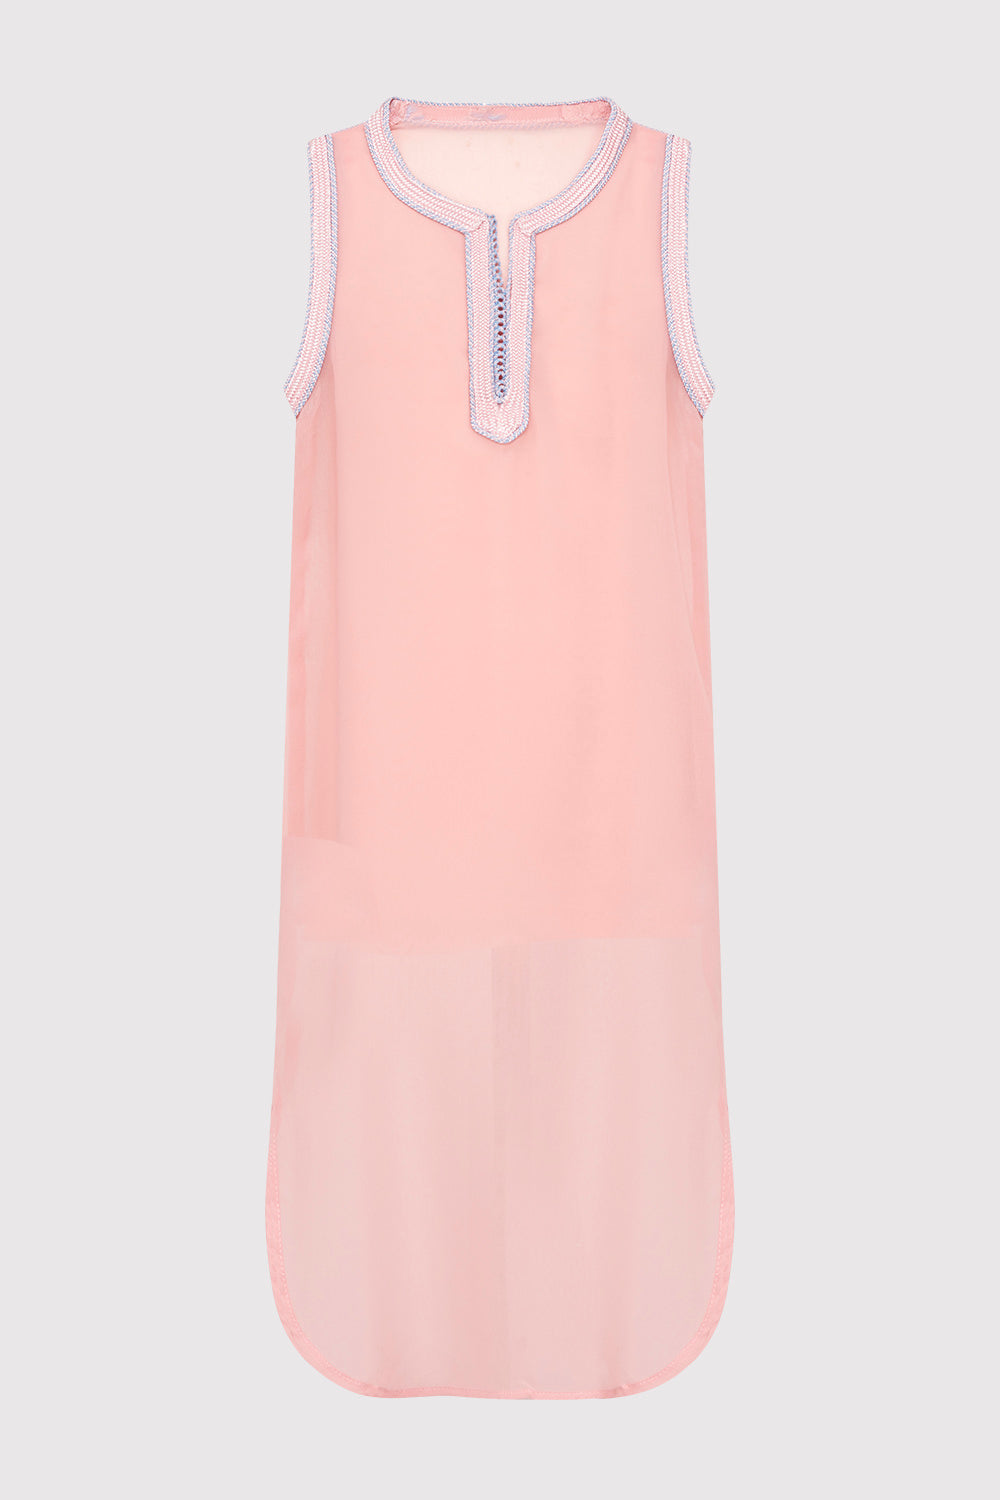 Gandoura Ouarda Girl's Sleeveless V-Neck Dress and Rope Belt in Sky Blue and Pink (2-12yrs)